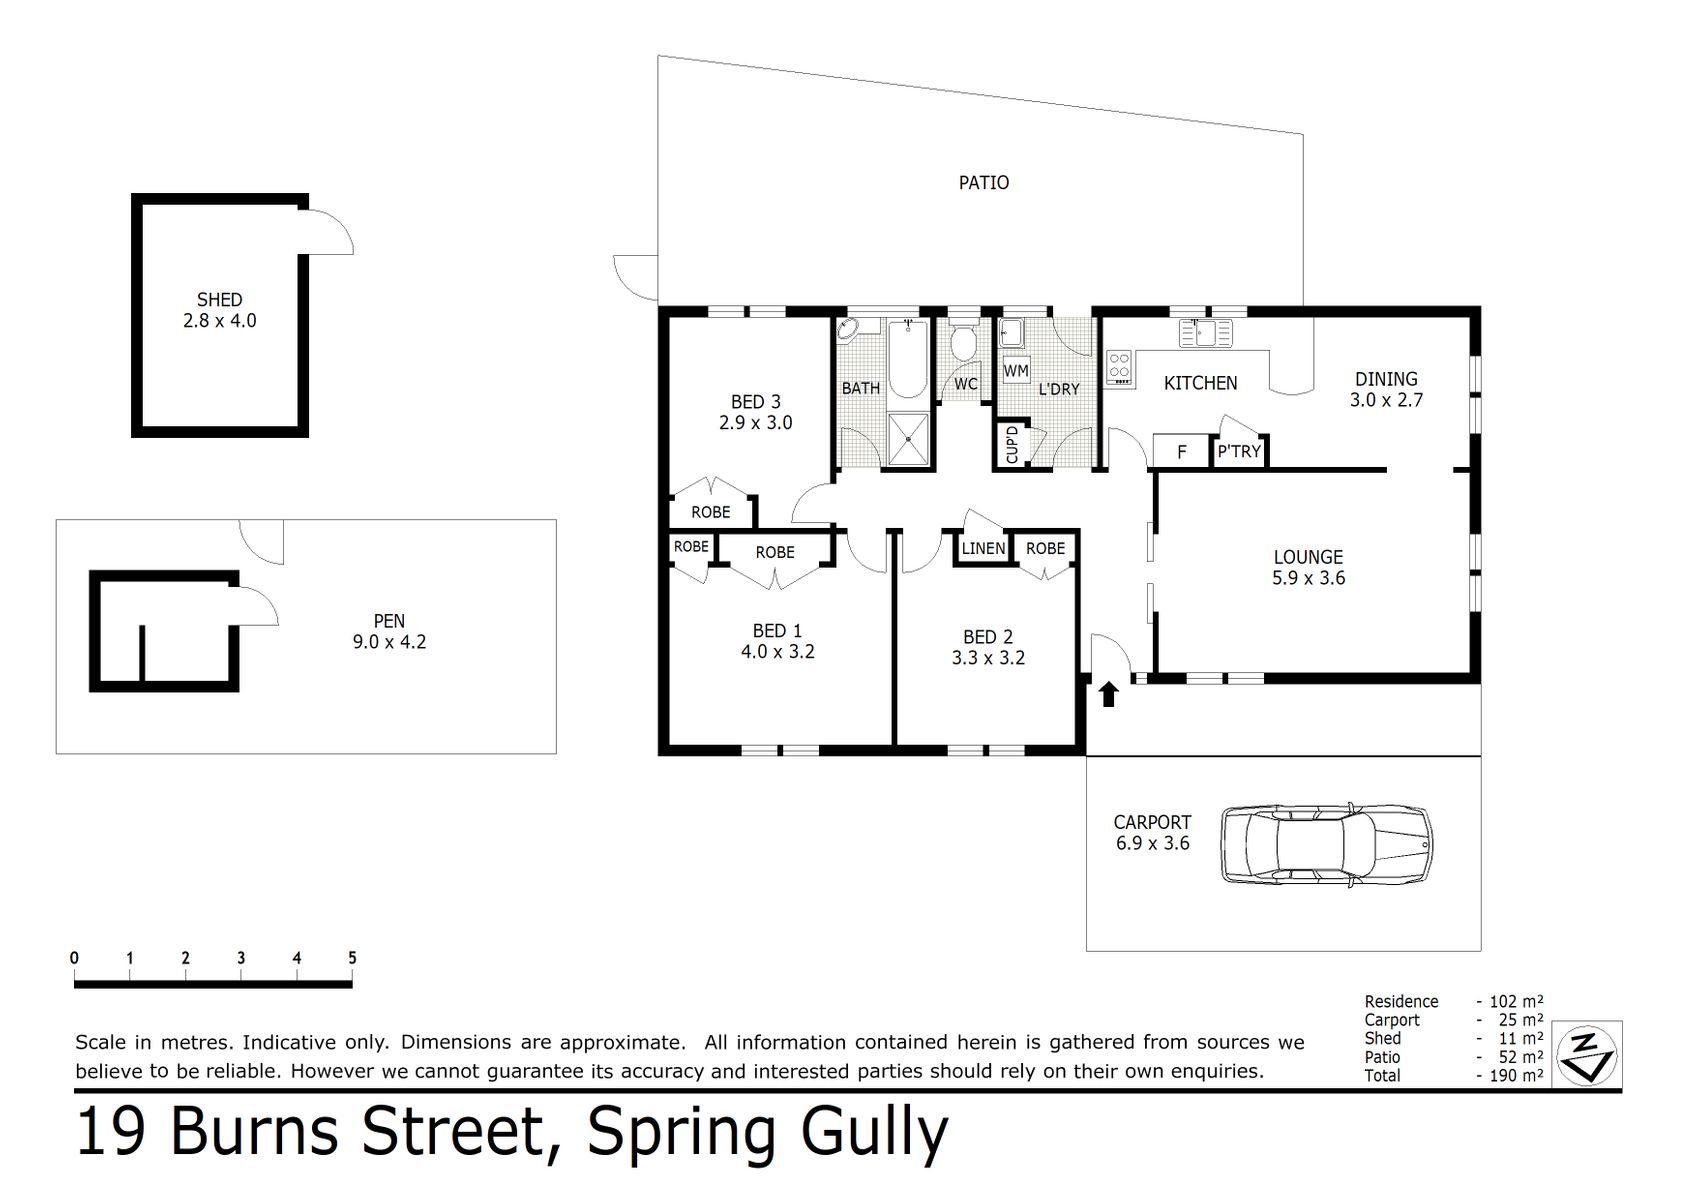 19 Burns Street  Spring Gully (16 APR 2021) 102sqm